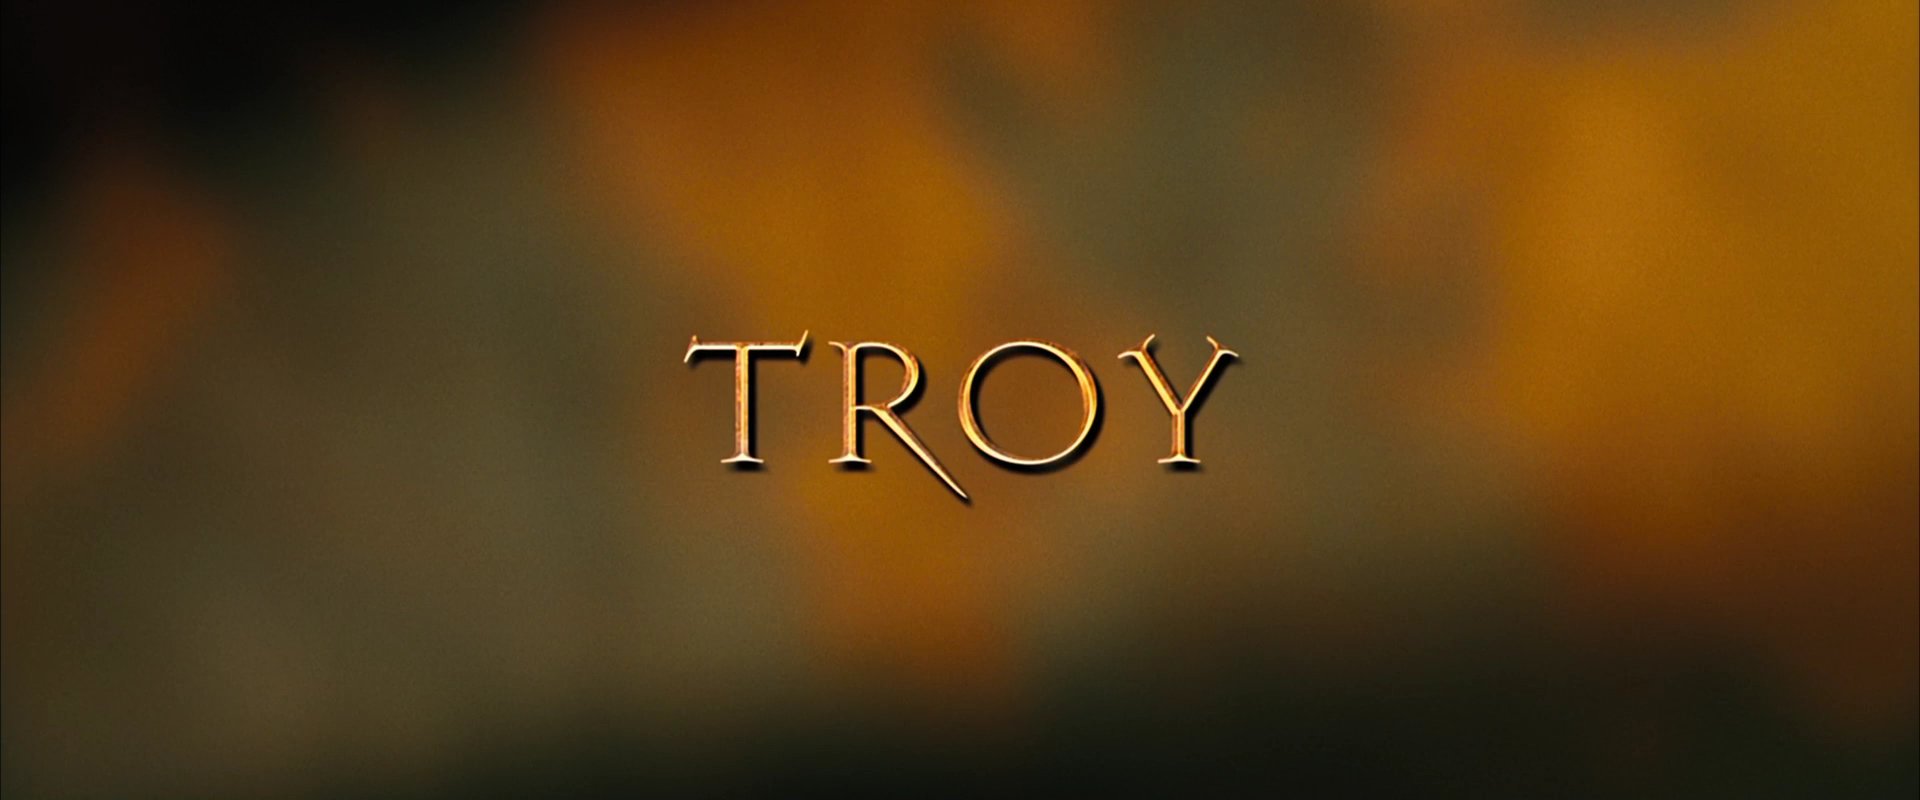 Troy0001.jpg